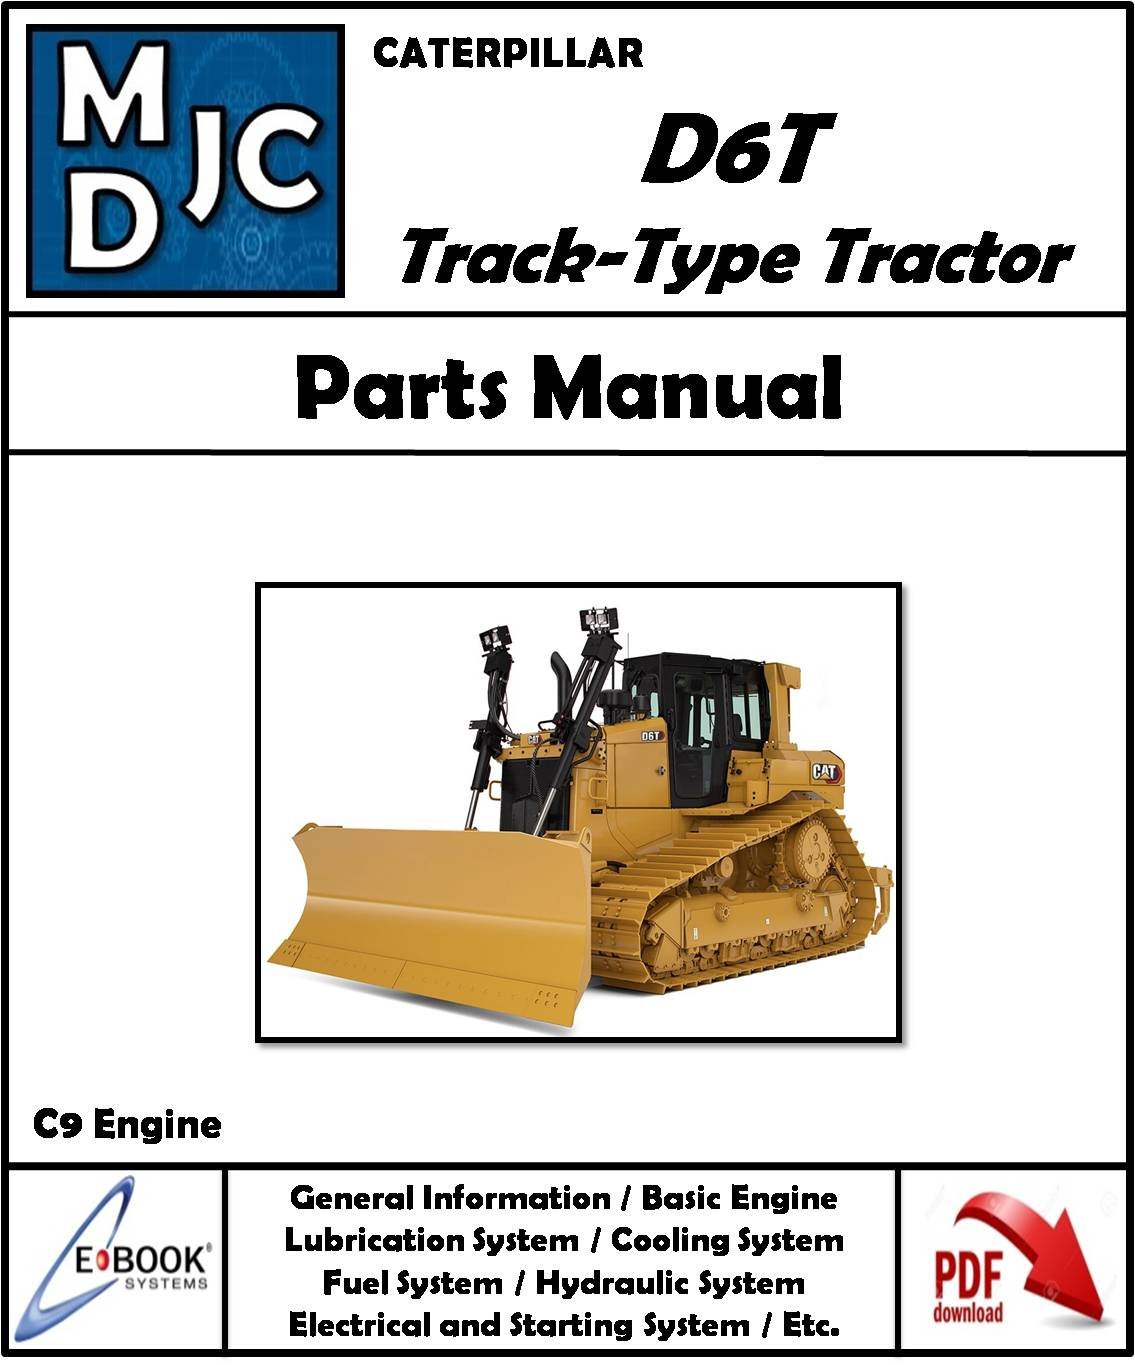 Catalogo de Partes Caterpillar D6T / TRACK-TYPE TRACTOR